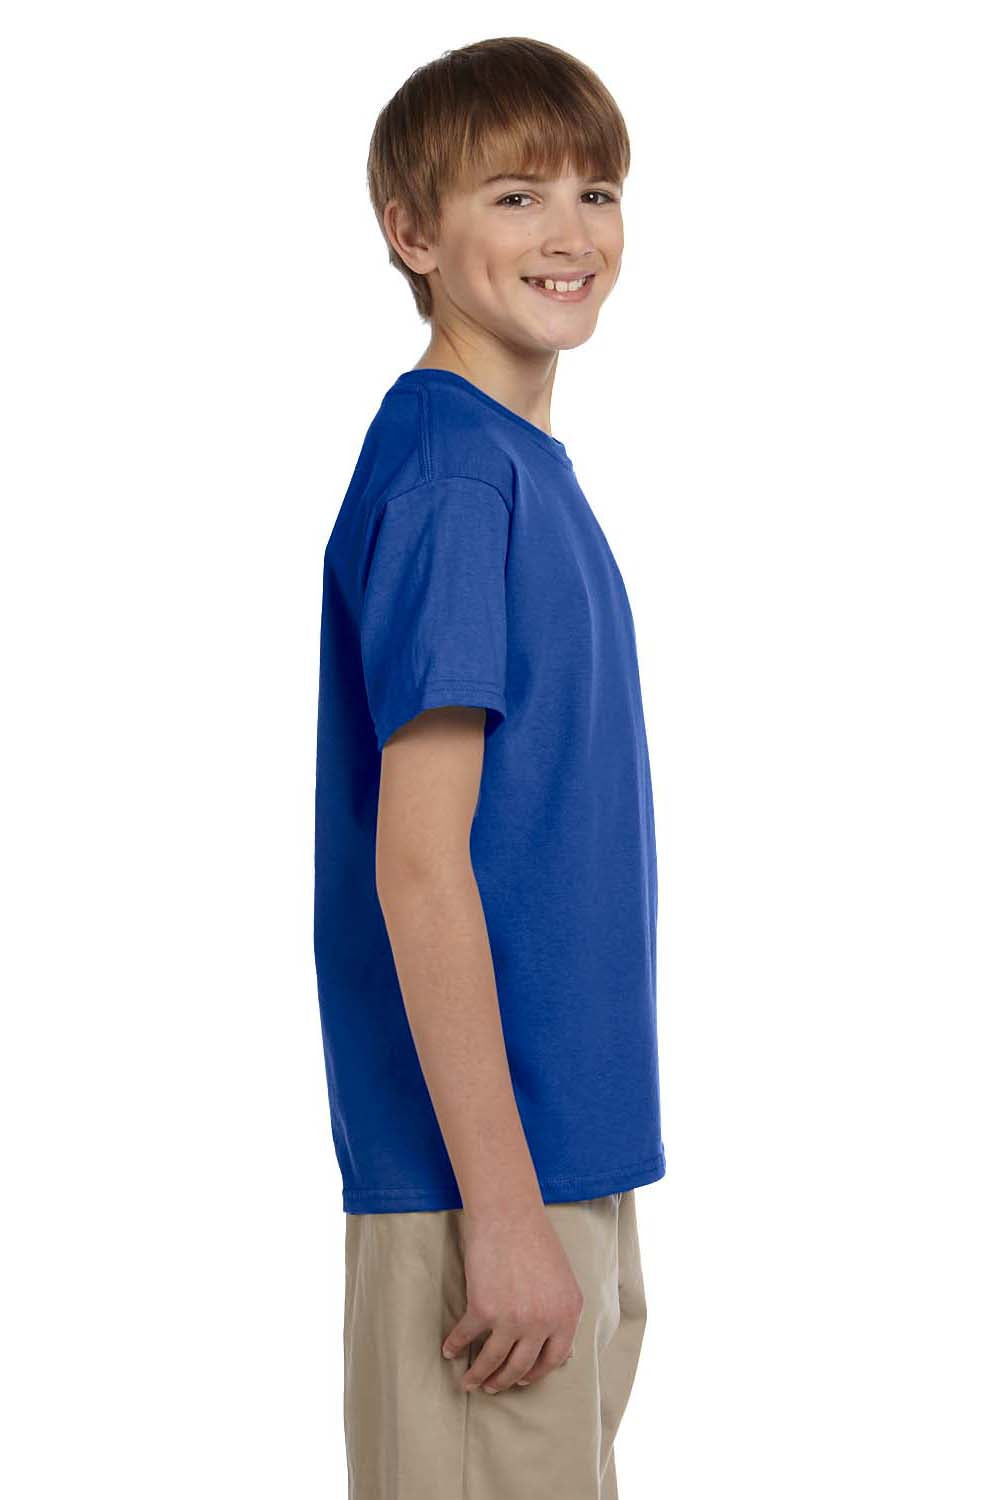 Hanes 5370 Youth EcoSmart Short Sleeve Crewneck T-Shirt Royal Blue Side